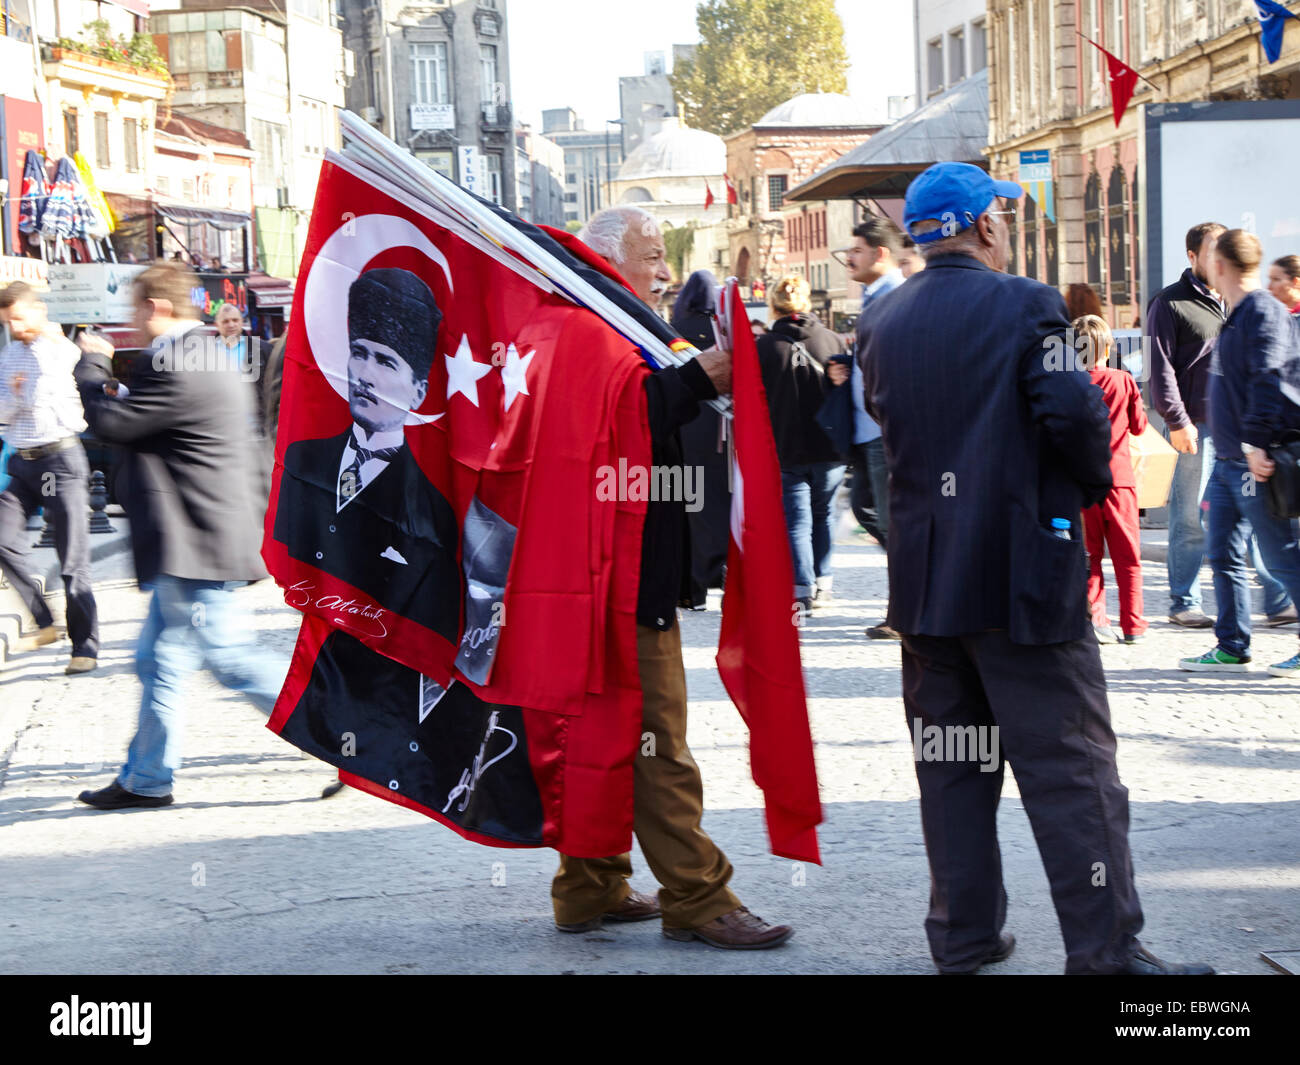 Turkish flag seller Kemal Atatürk red crescent. Stock Photo